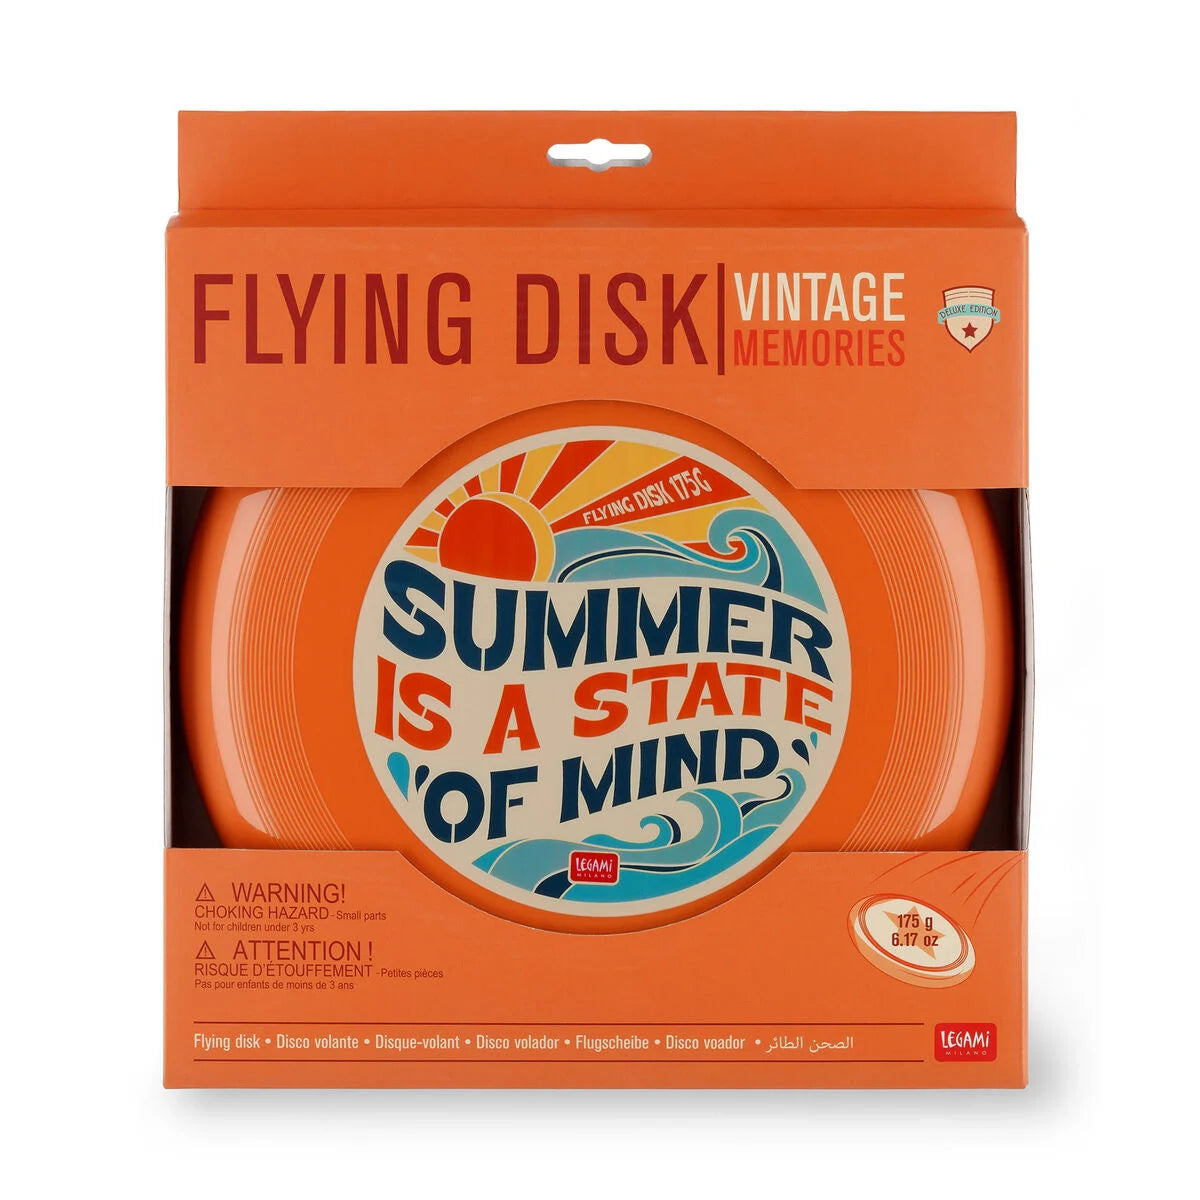 Disco Volante - Flying disk